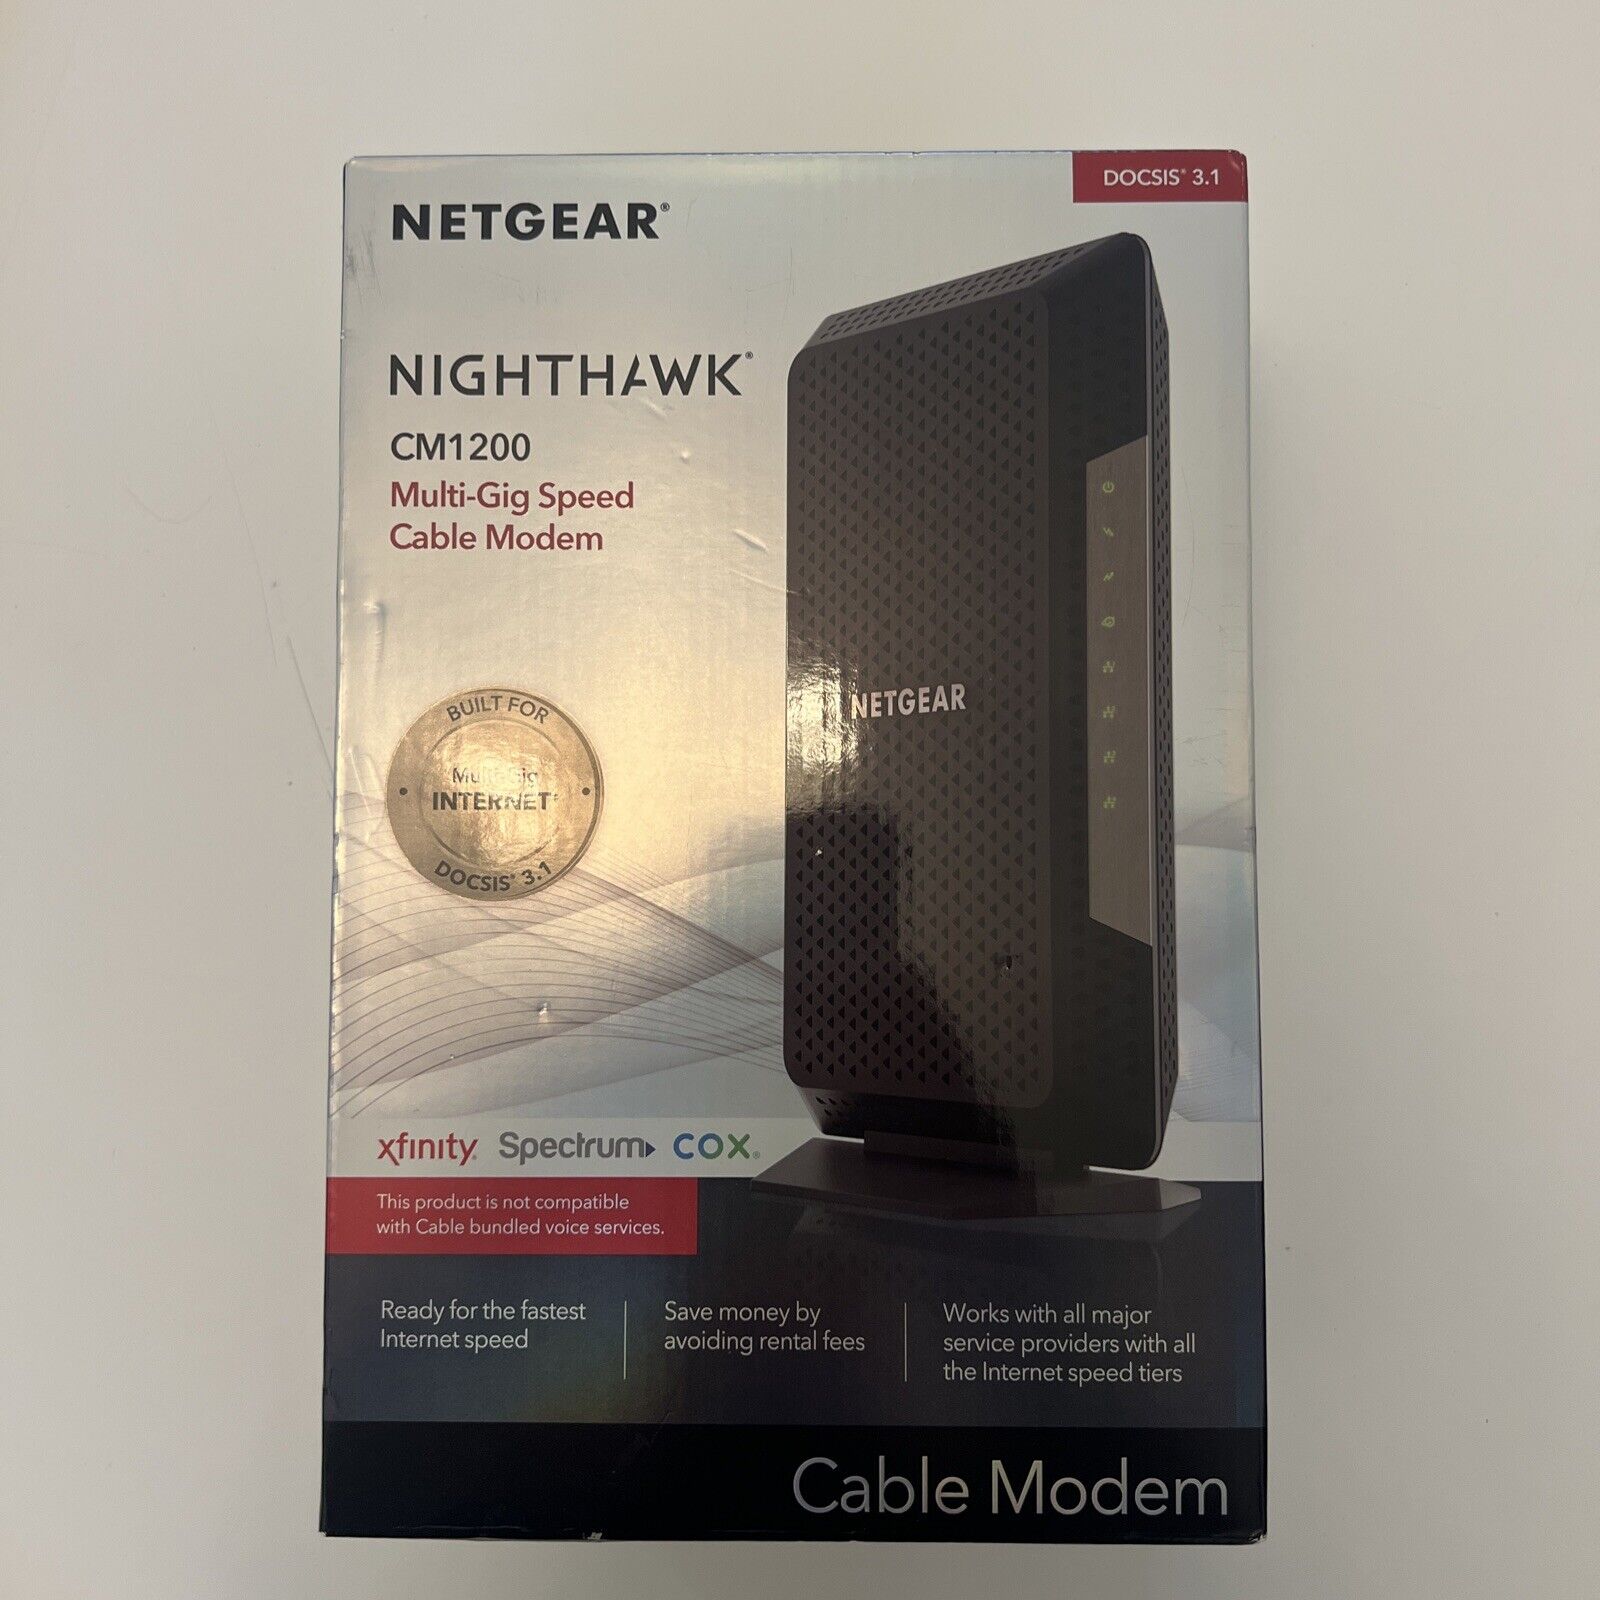 Used NETGEAR Nighthawk CM1200-100NAS DOCSIS 3.1 Cable Modem